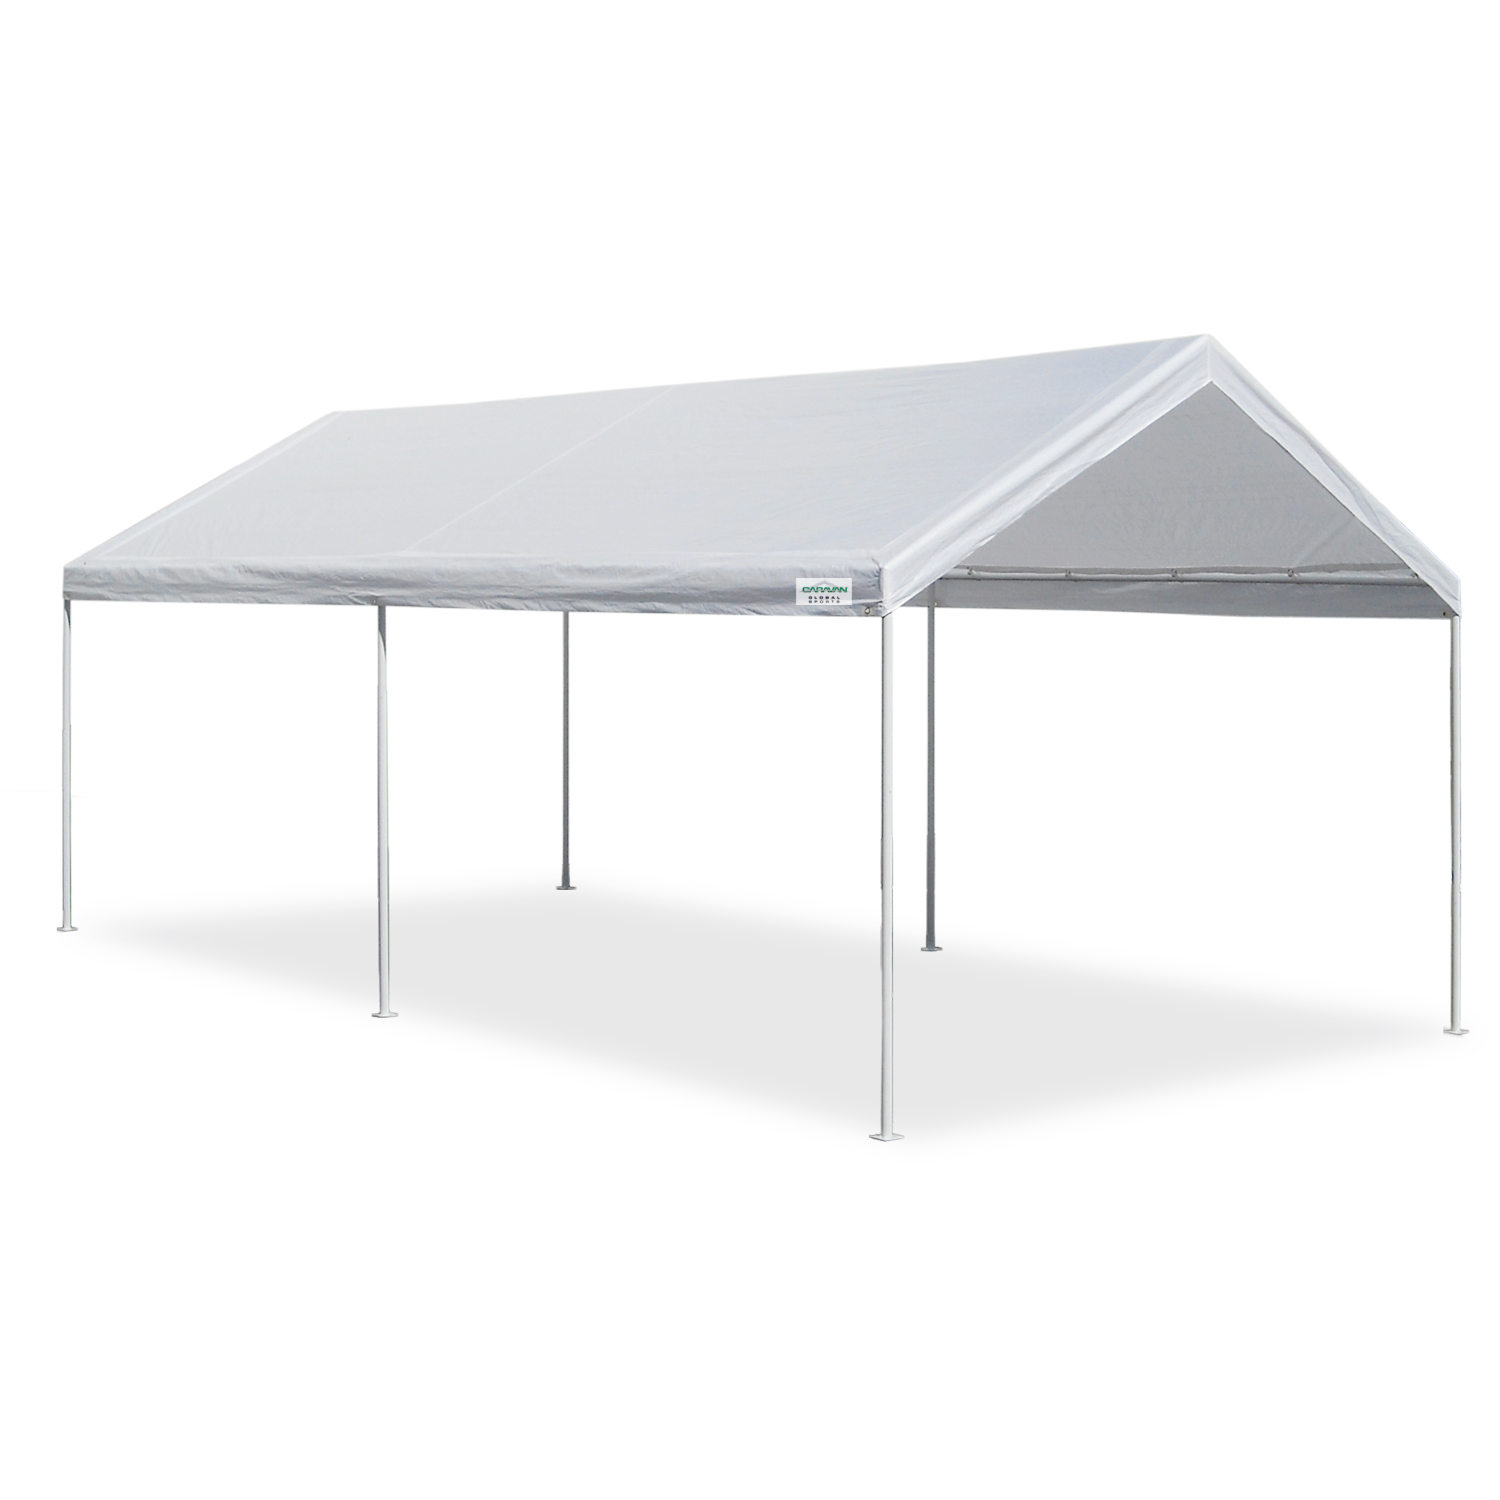 Caravan Canopy Domain Basic 10' W x 20' L x 8.5' H Metal Steel Frame & Polyester Top Carport Shelter - image 1 of 5